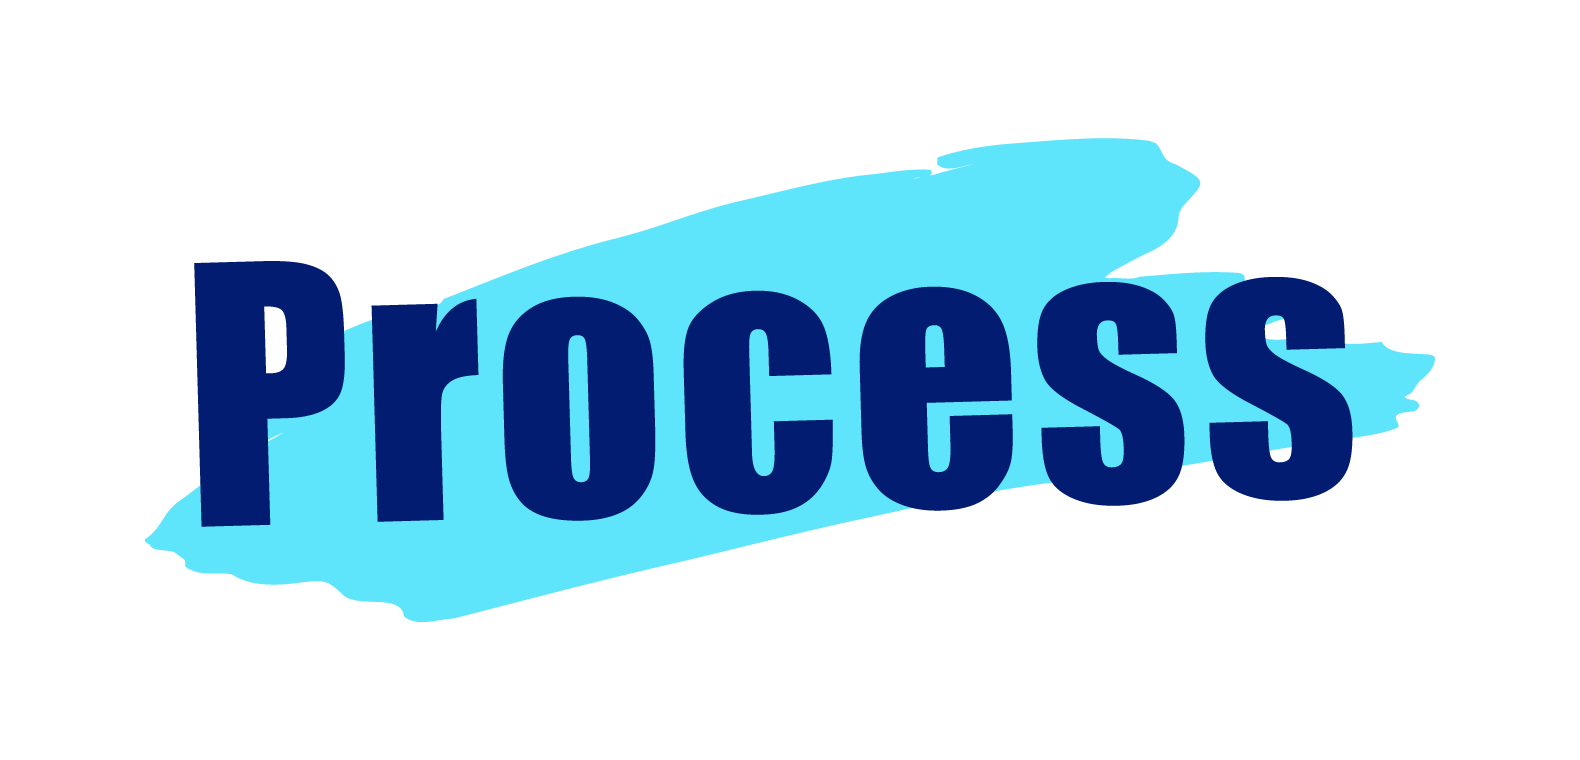 process technologie